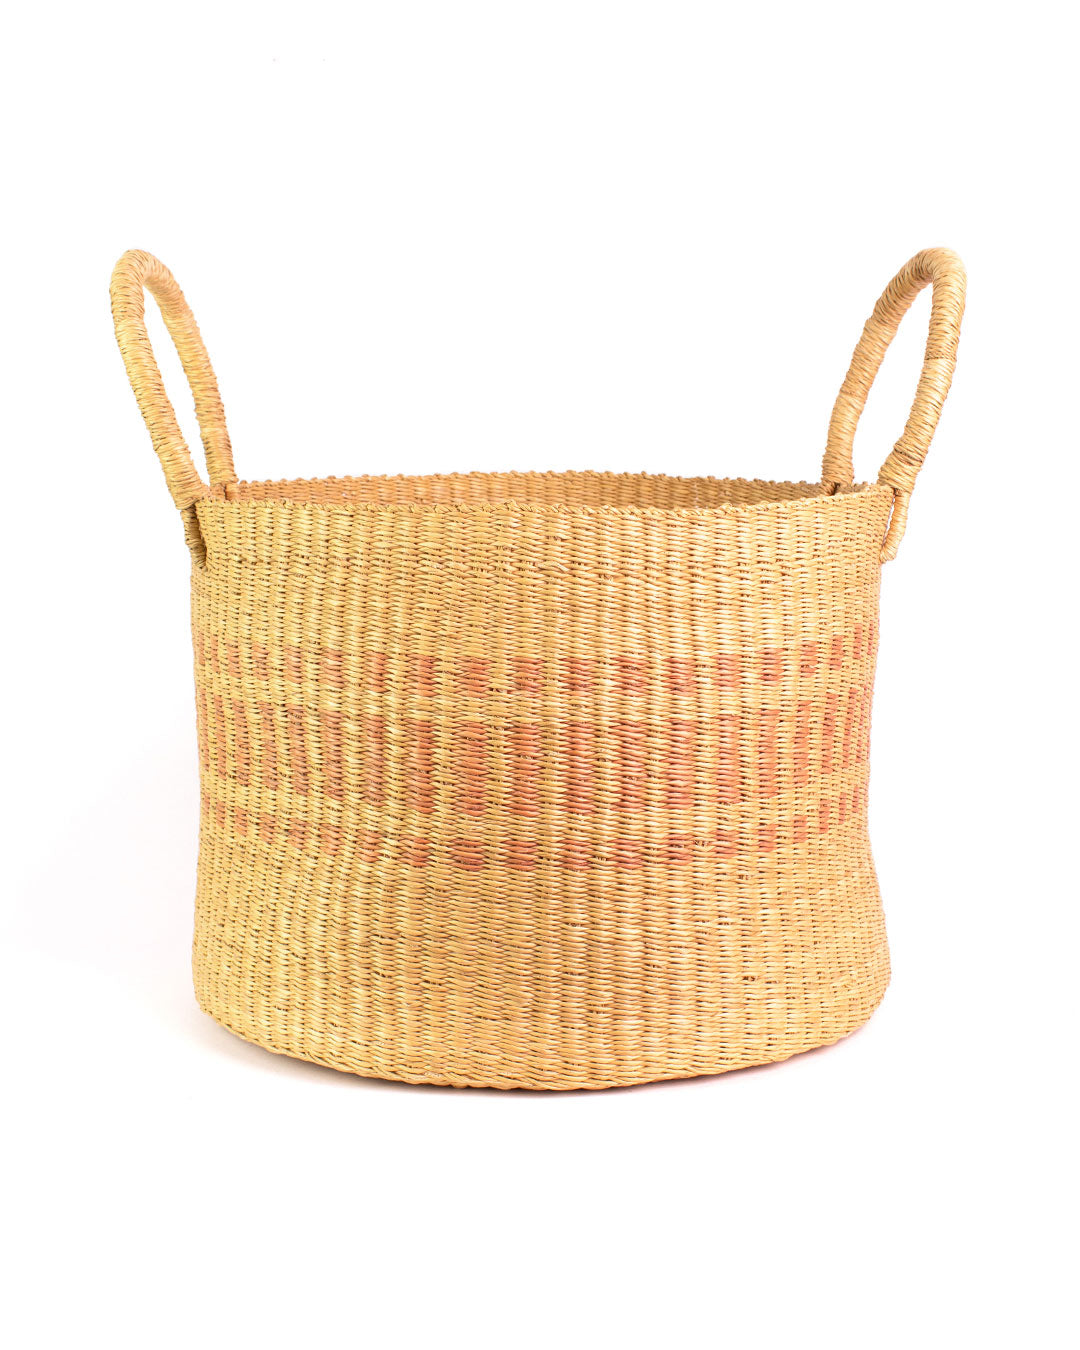 Soro Basket Hand-woven Aketekete